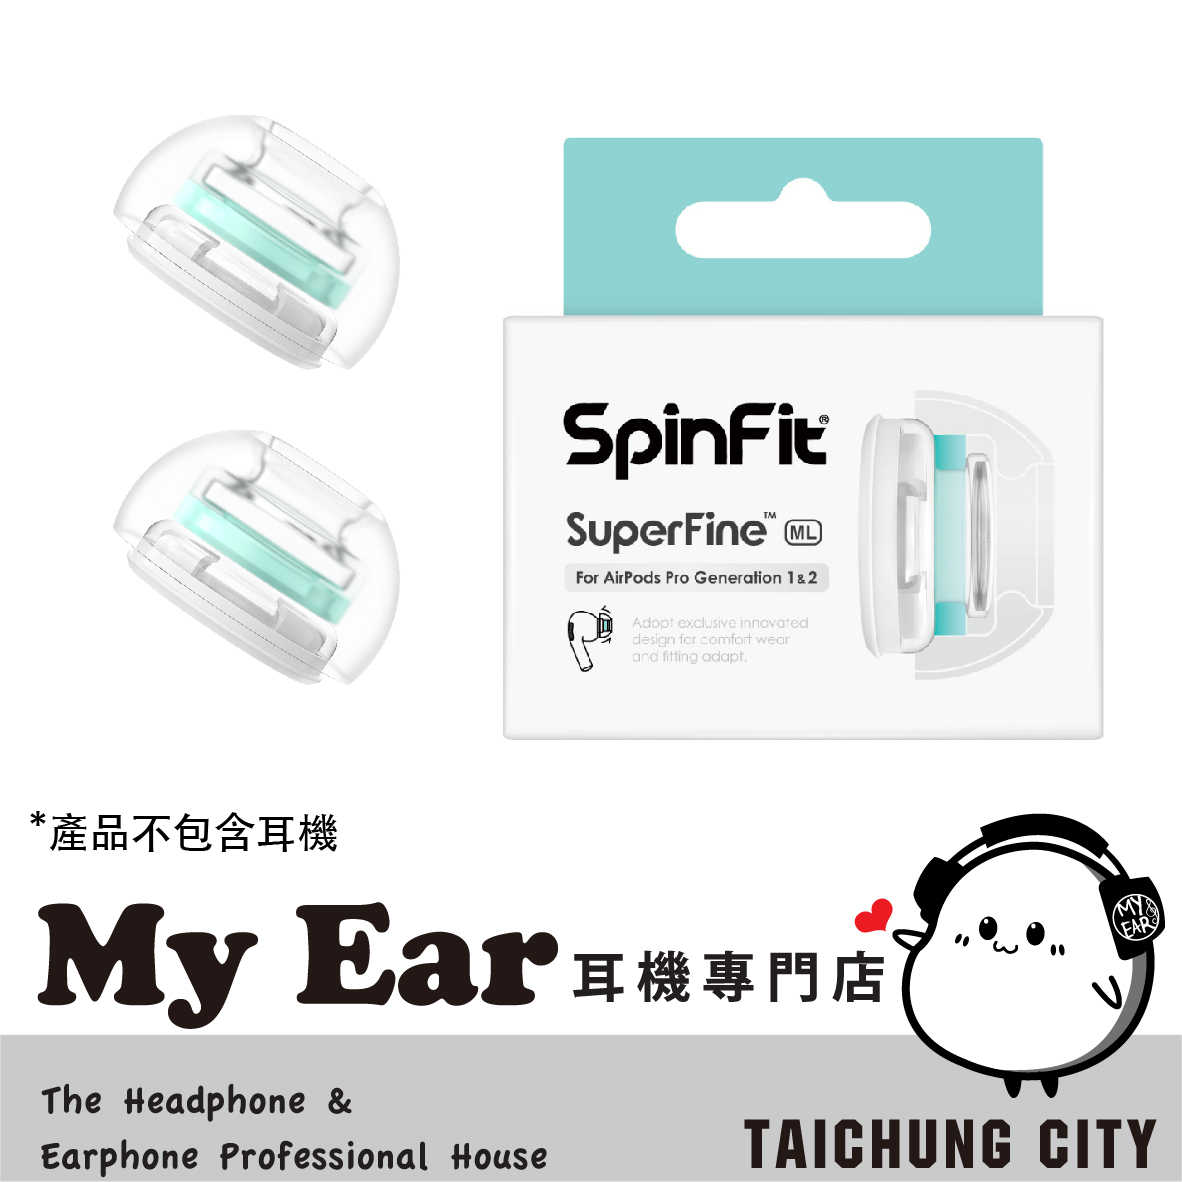 SpinFit SuperFine ML 適用Airpods Pro CP1025 矽膠耳塞 | My Ear耳機專門店